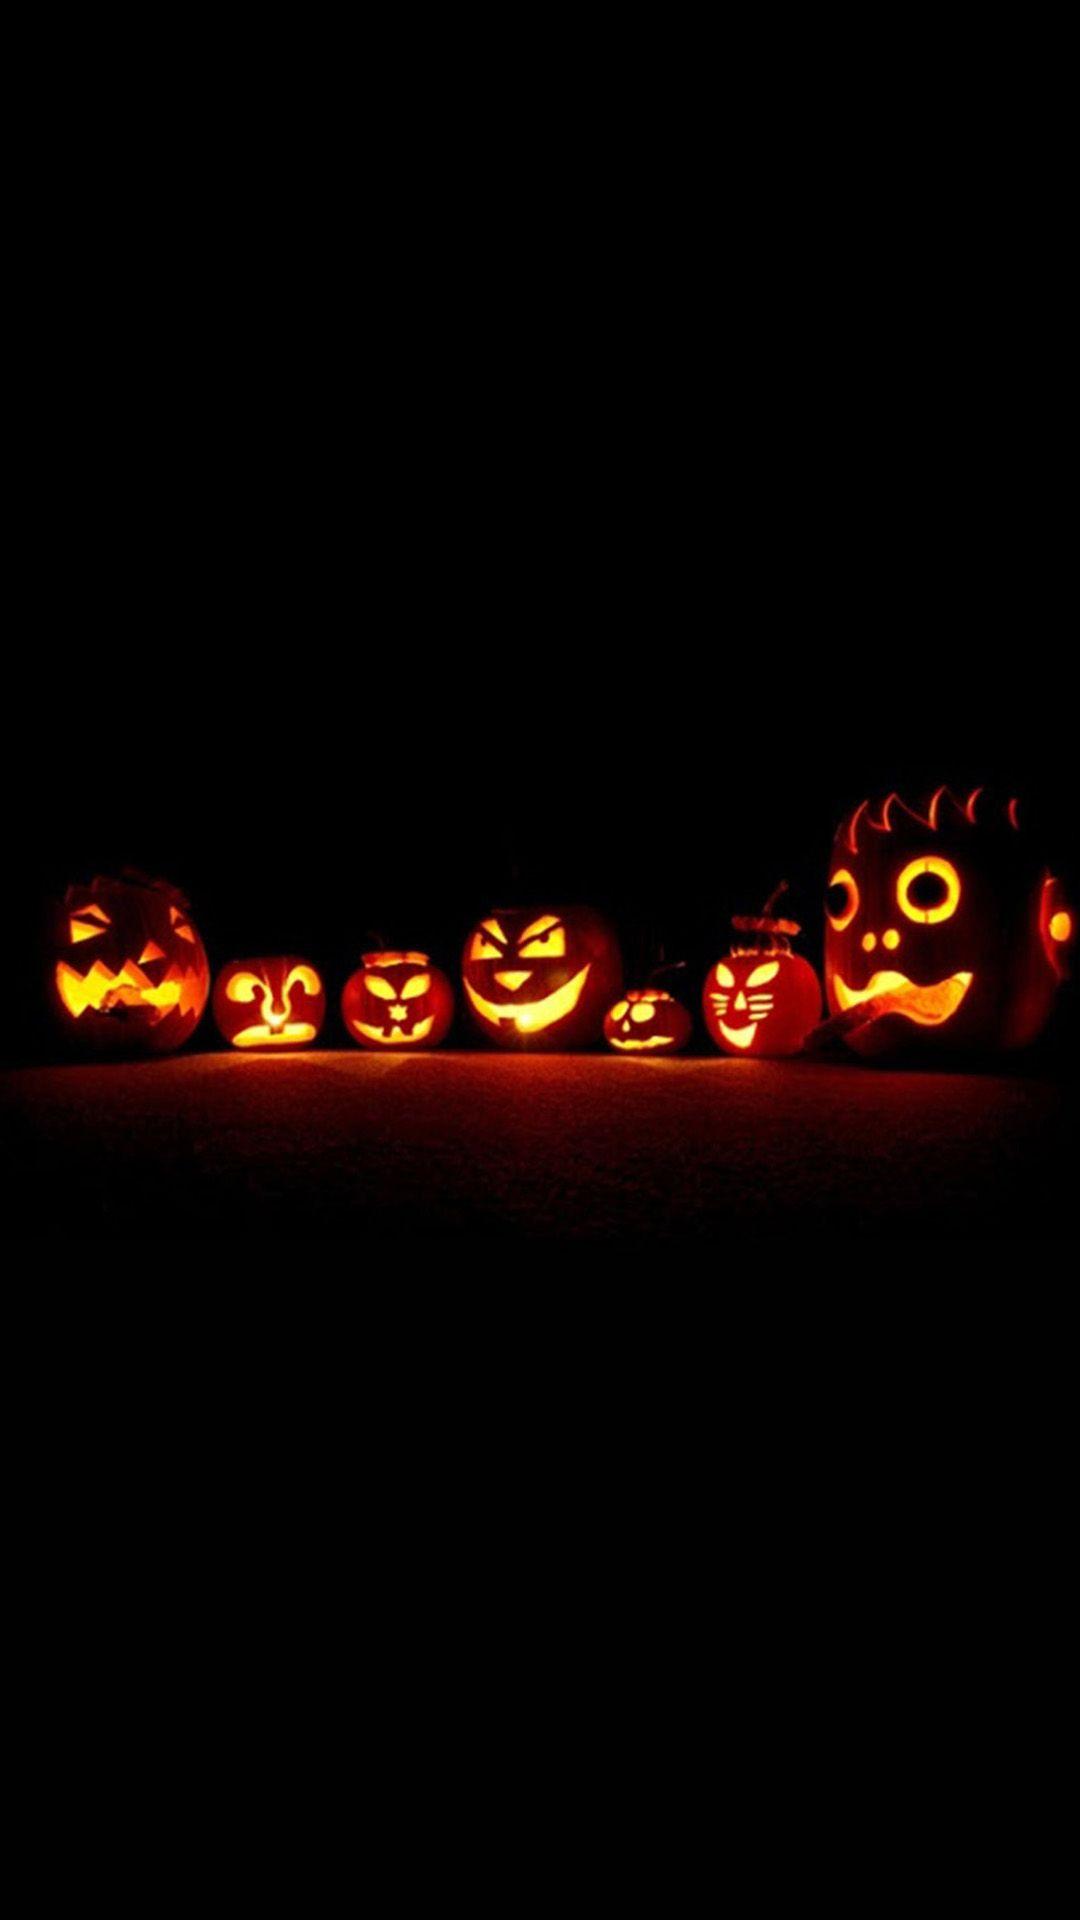 1080x1920 Great Cute Halloween Hình Nền iPhone